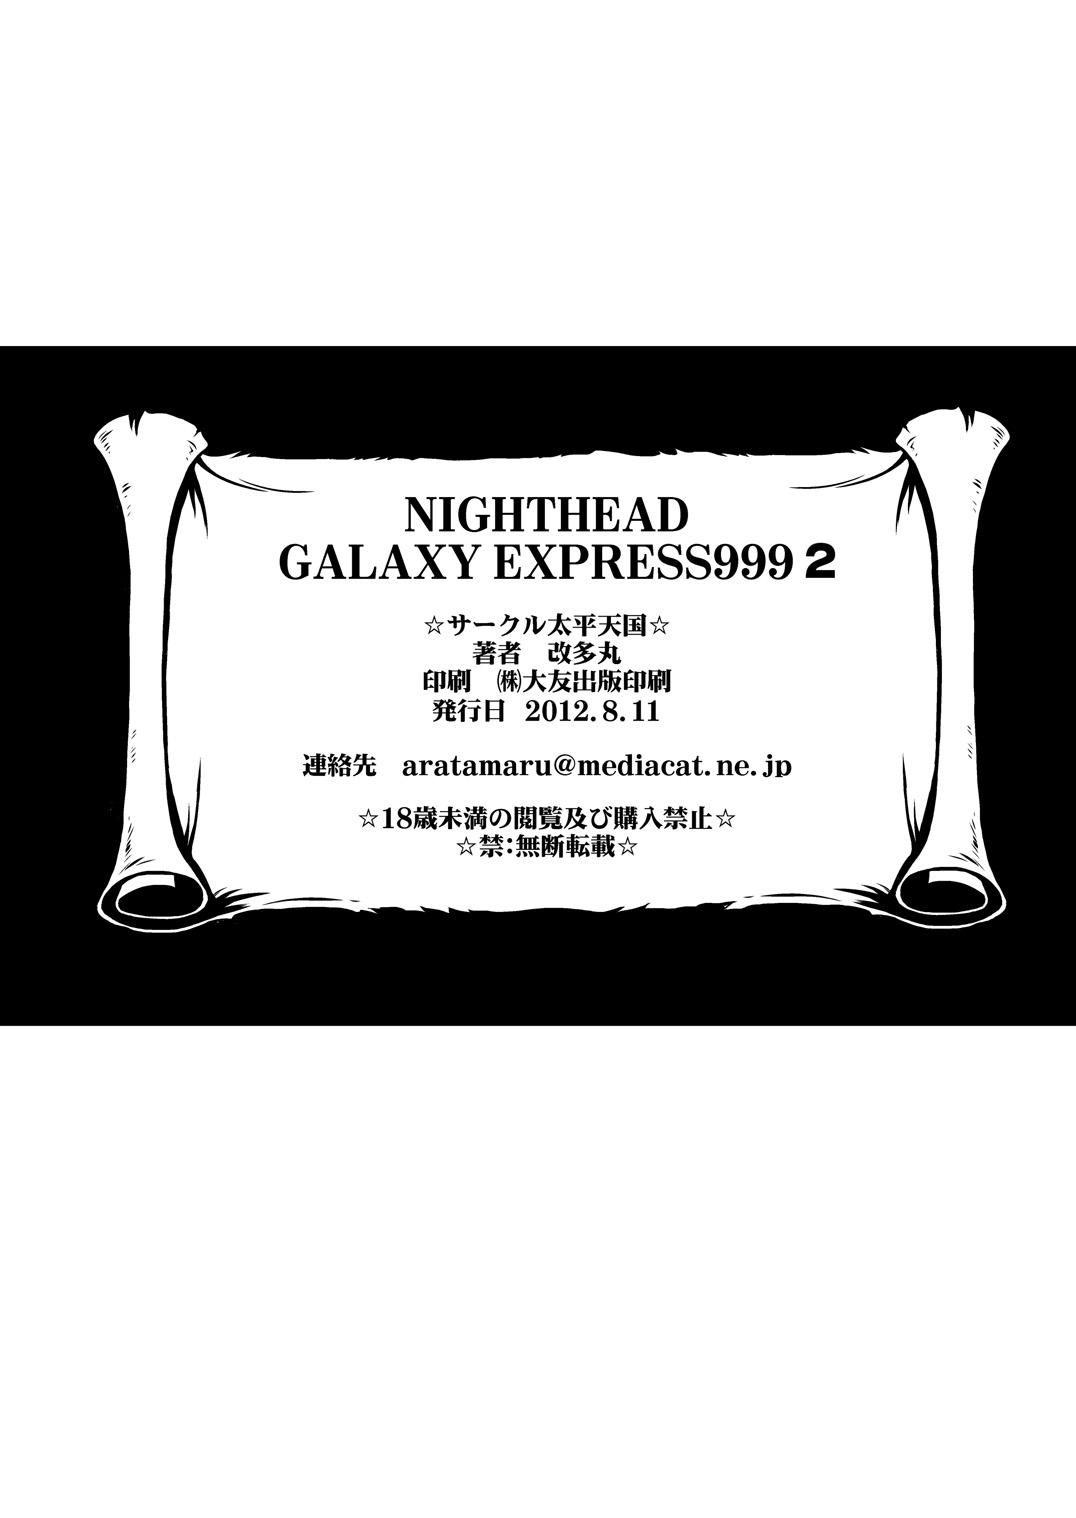 NIGHTHEAD GALAXY EXPRESS 999 2 23